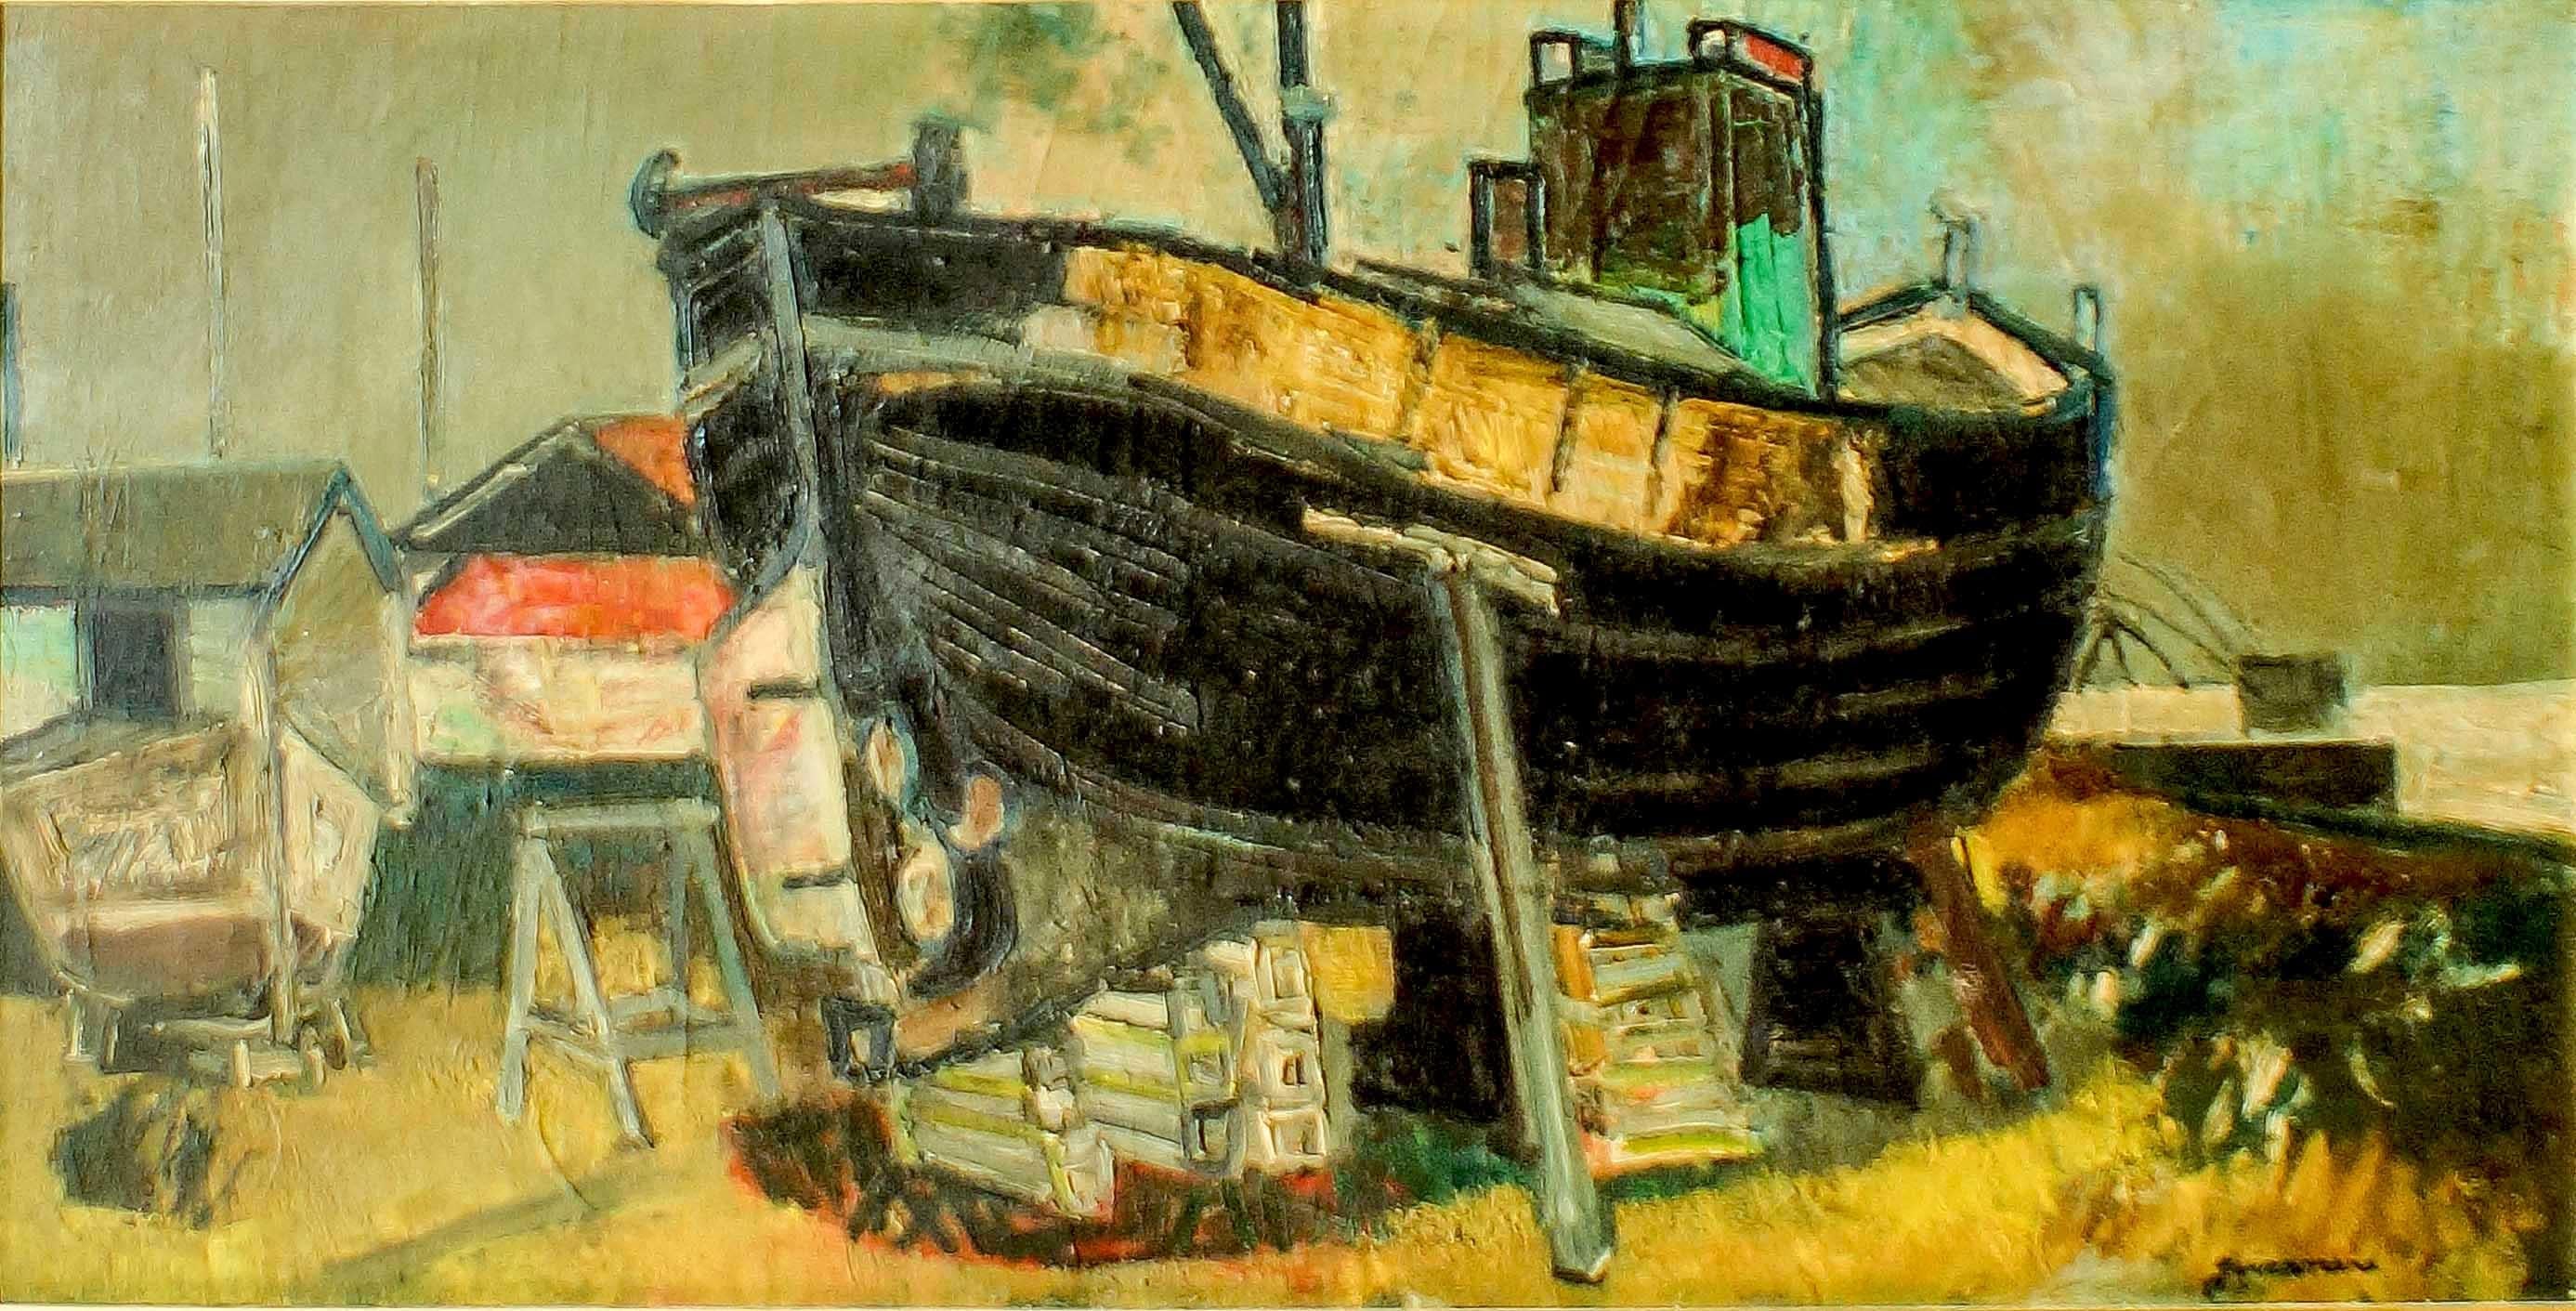 Shipyard - Oil on Canvas by Paul Guiramand - 1955 ca.